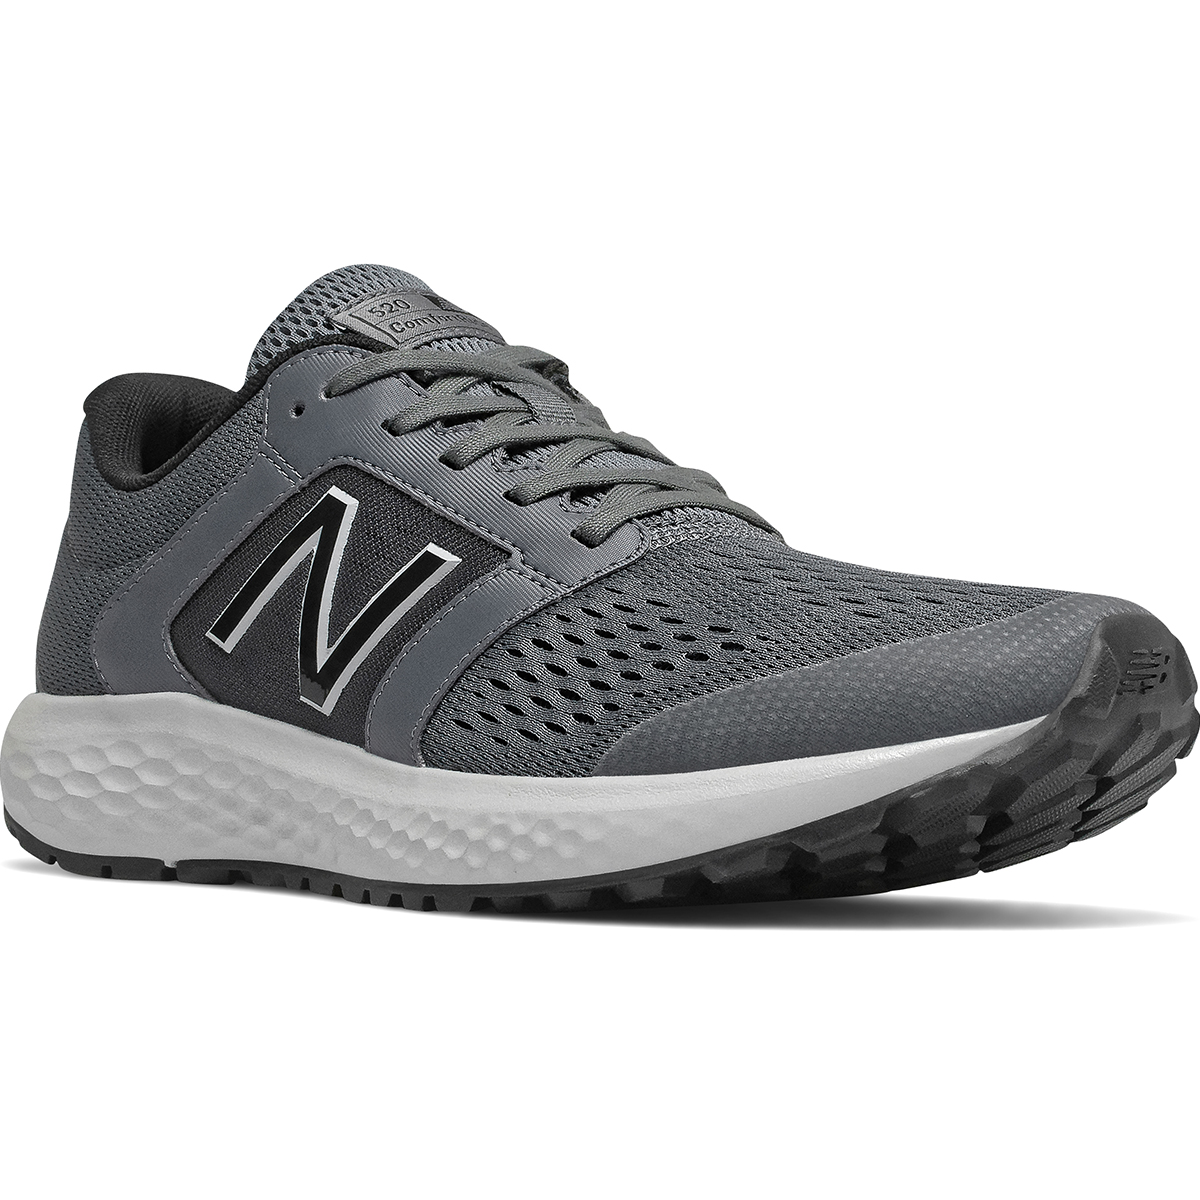 New Balance Men's 520 V5 Running Shoe, Wide - Black, 8.5